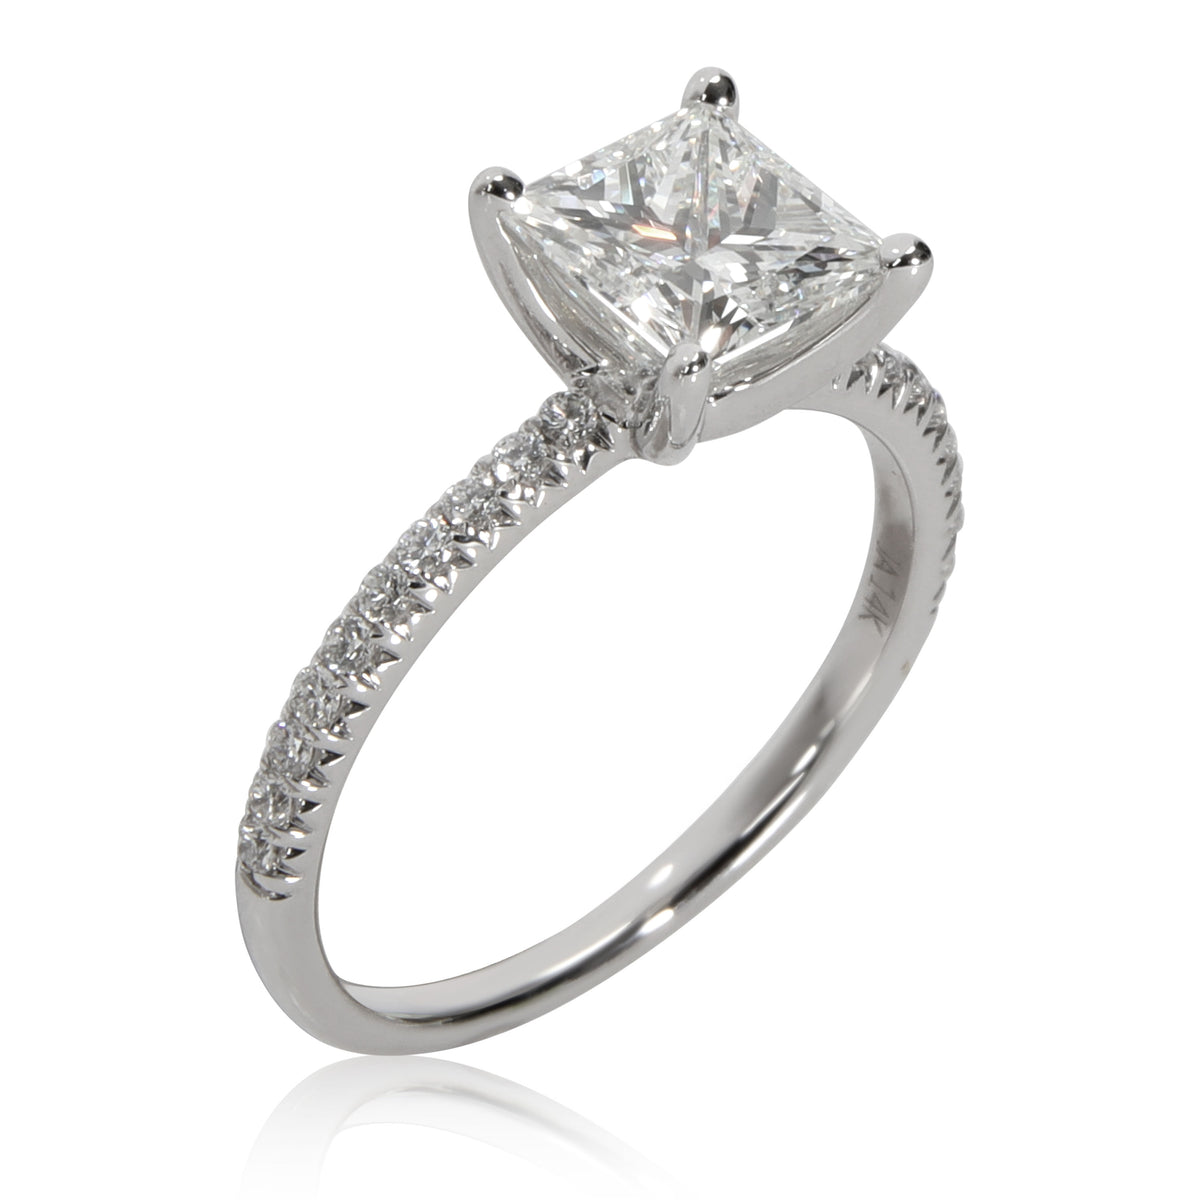 James Allen Petite Pave Diamond Engagement Ring in 14K White Gold H VS2 1.34 CTW